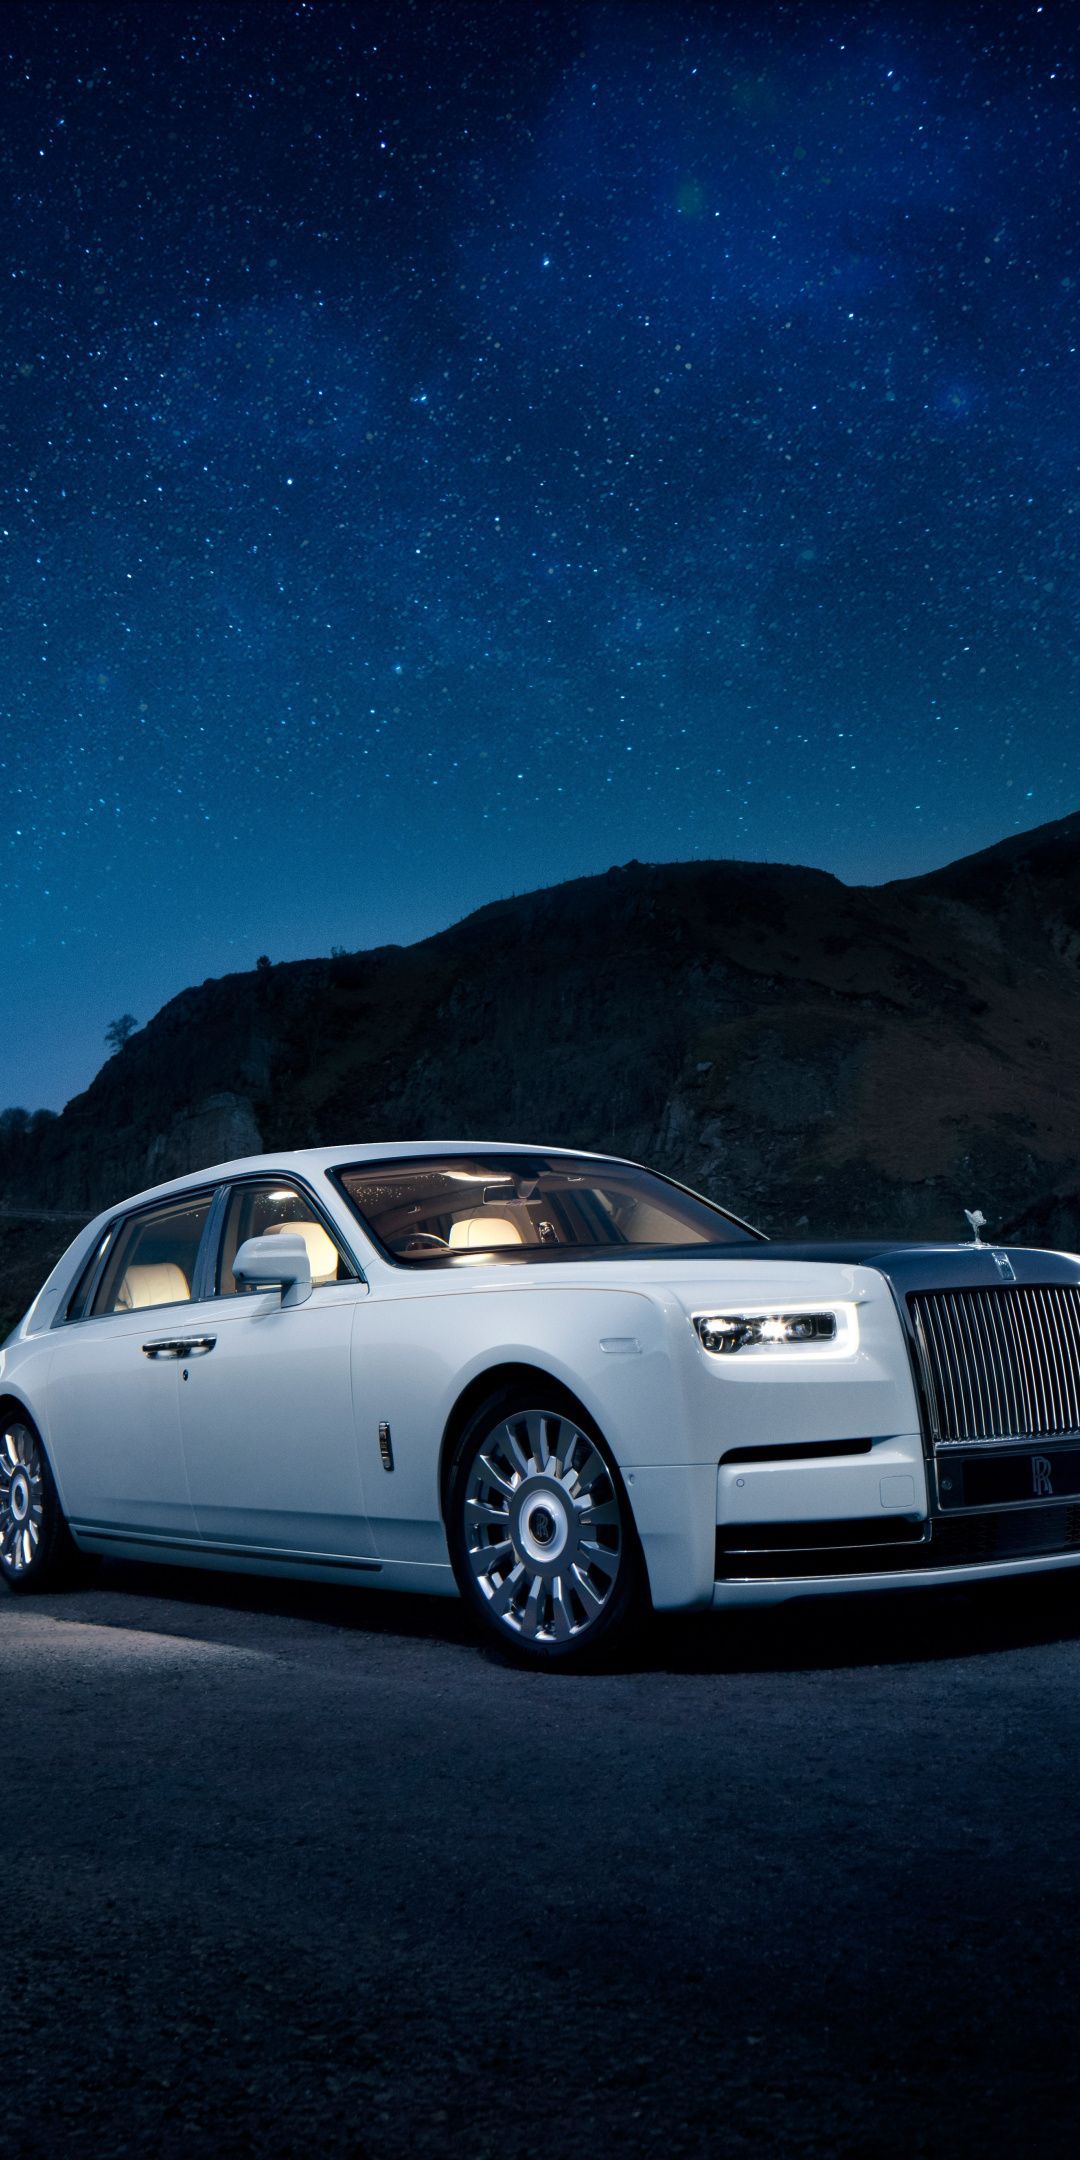 White Rolls Royce Phantom Tranquillity, 1080x2160 Wallpaper. Rolls Royce Phantom, White Rolls Royce, Rolls Royce Wallpaper